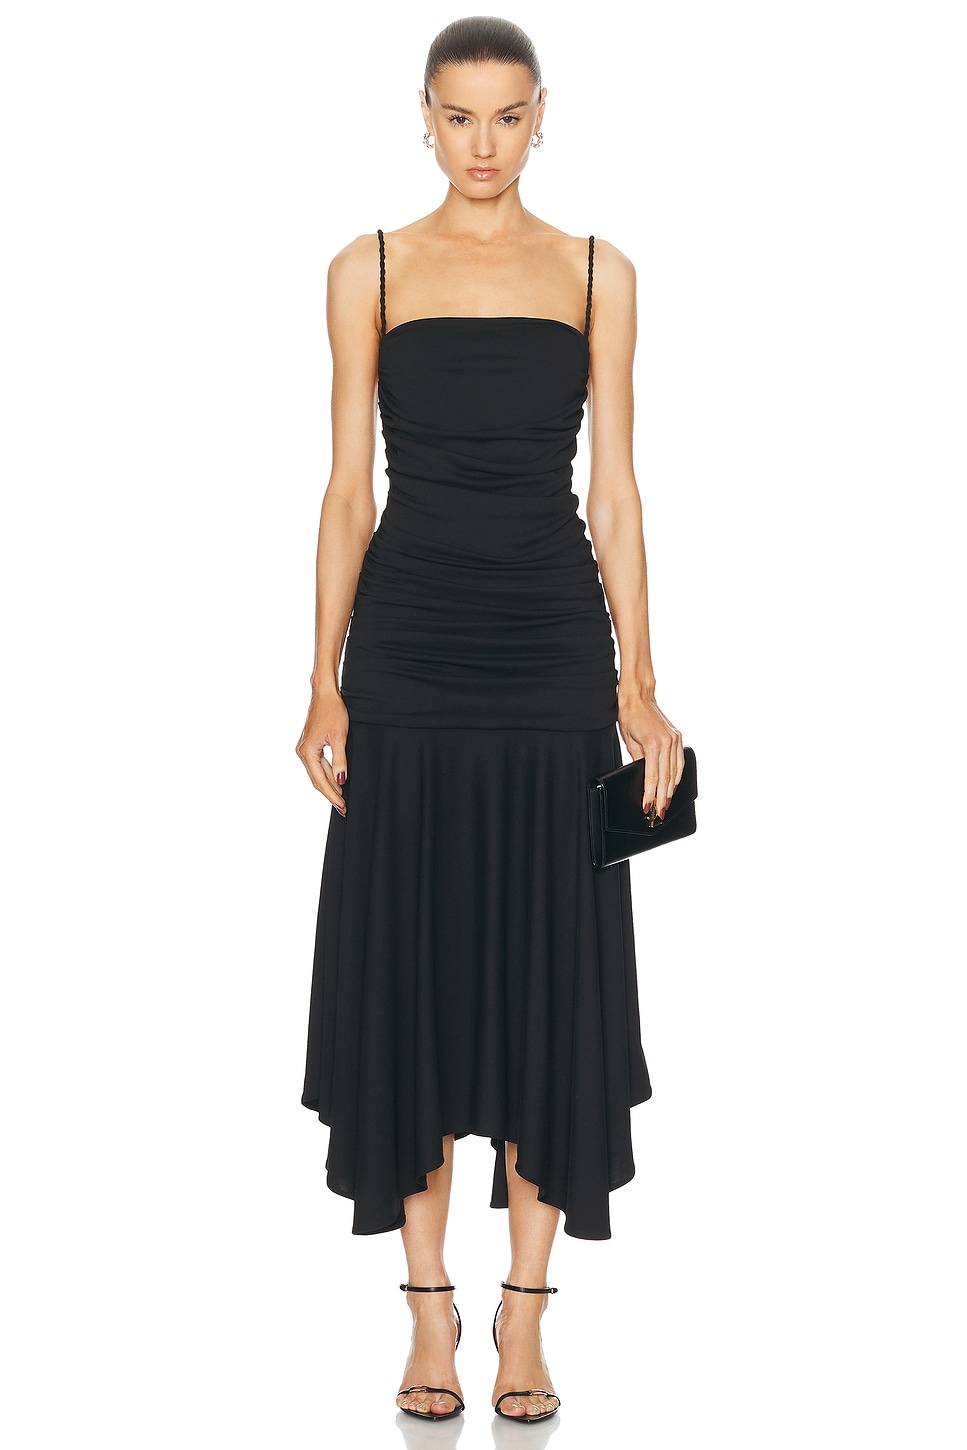 The Viradora Dress in Black